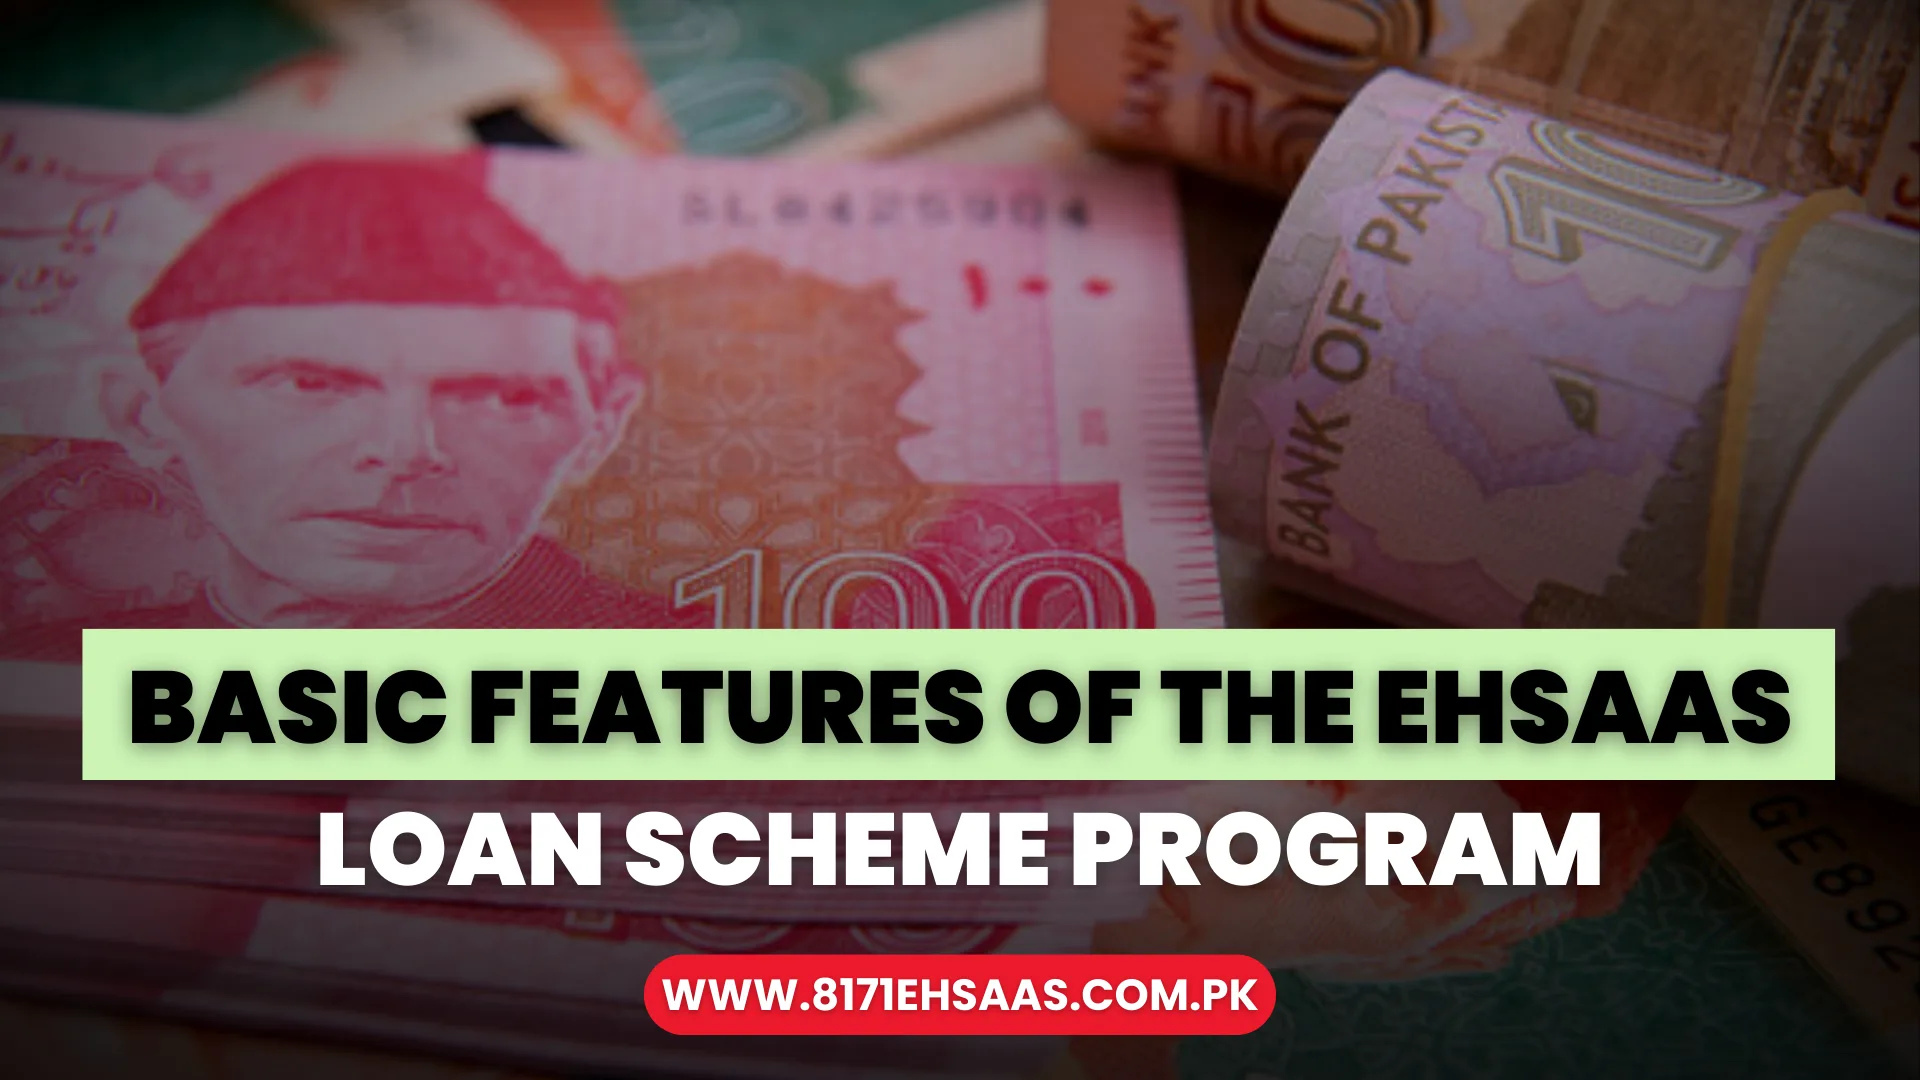 Basic Features of the Ehsaas Loan Scheme Program